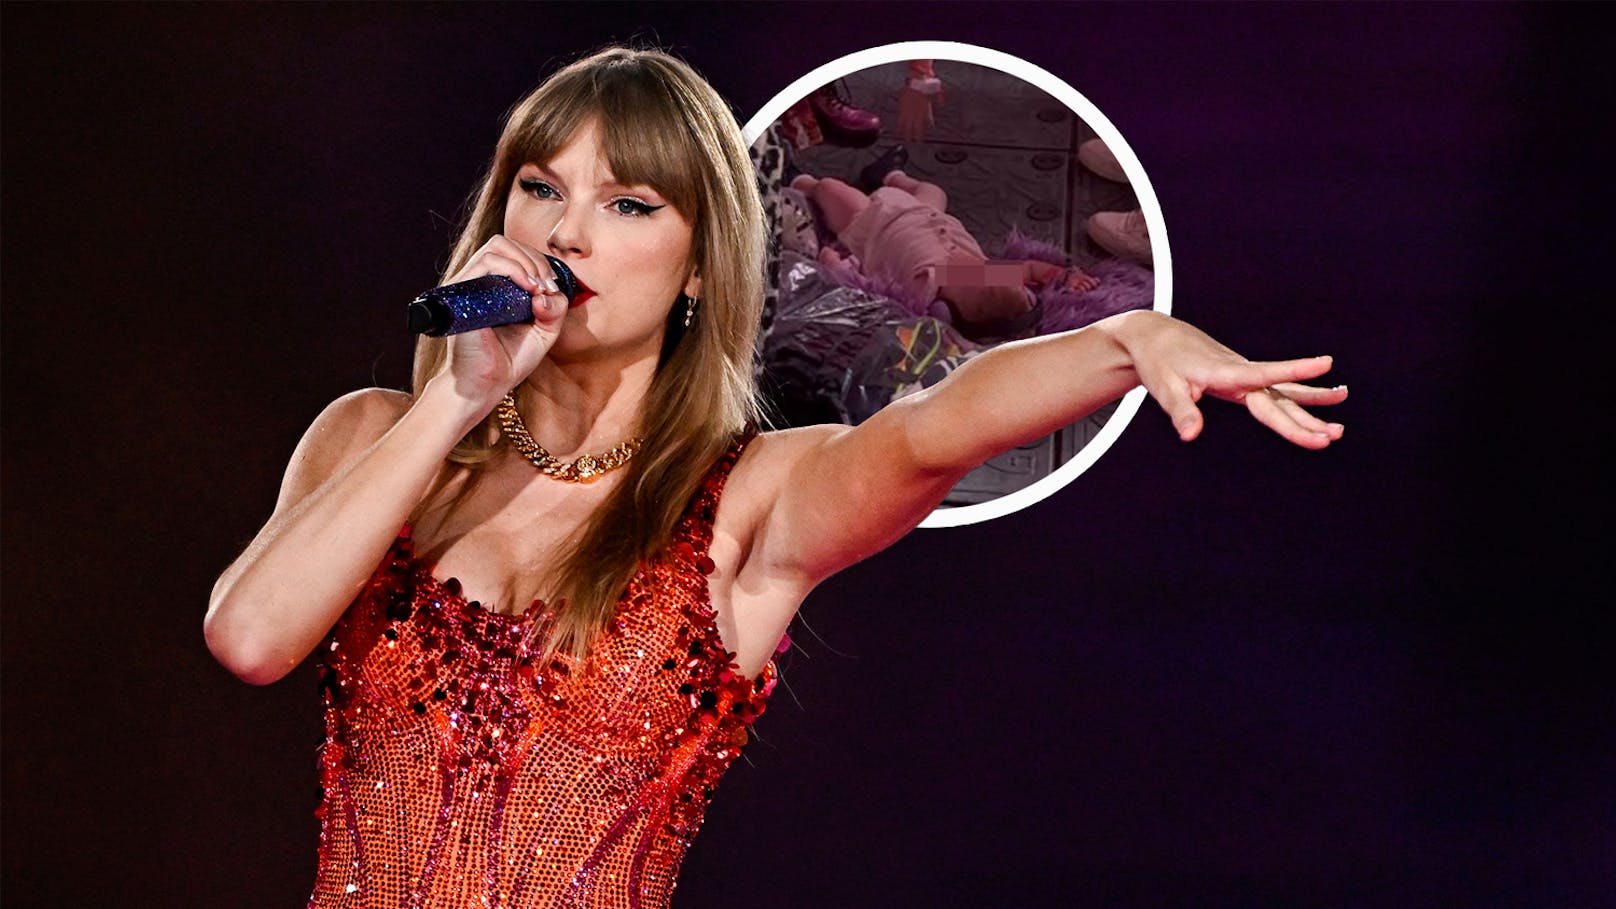 Fans schockiert! Baby am Boden bei Taylor Swift Konzert